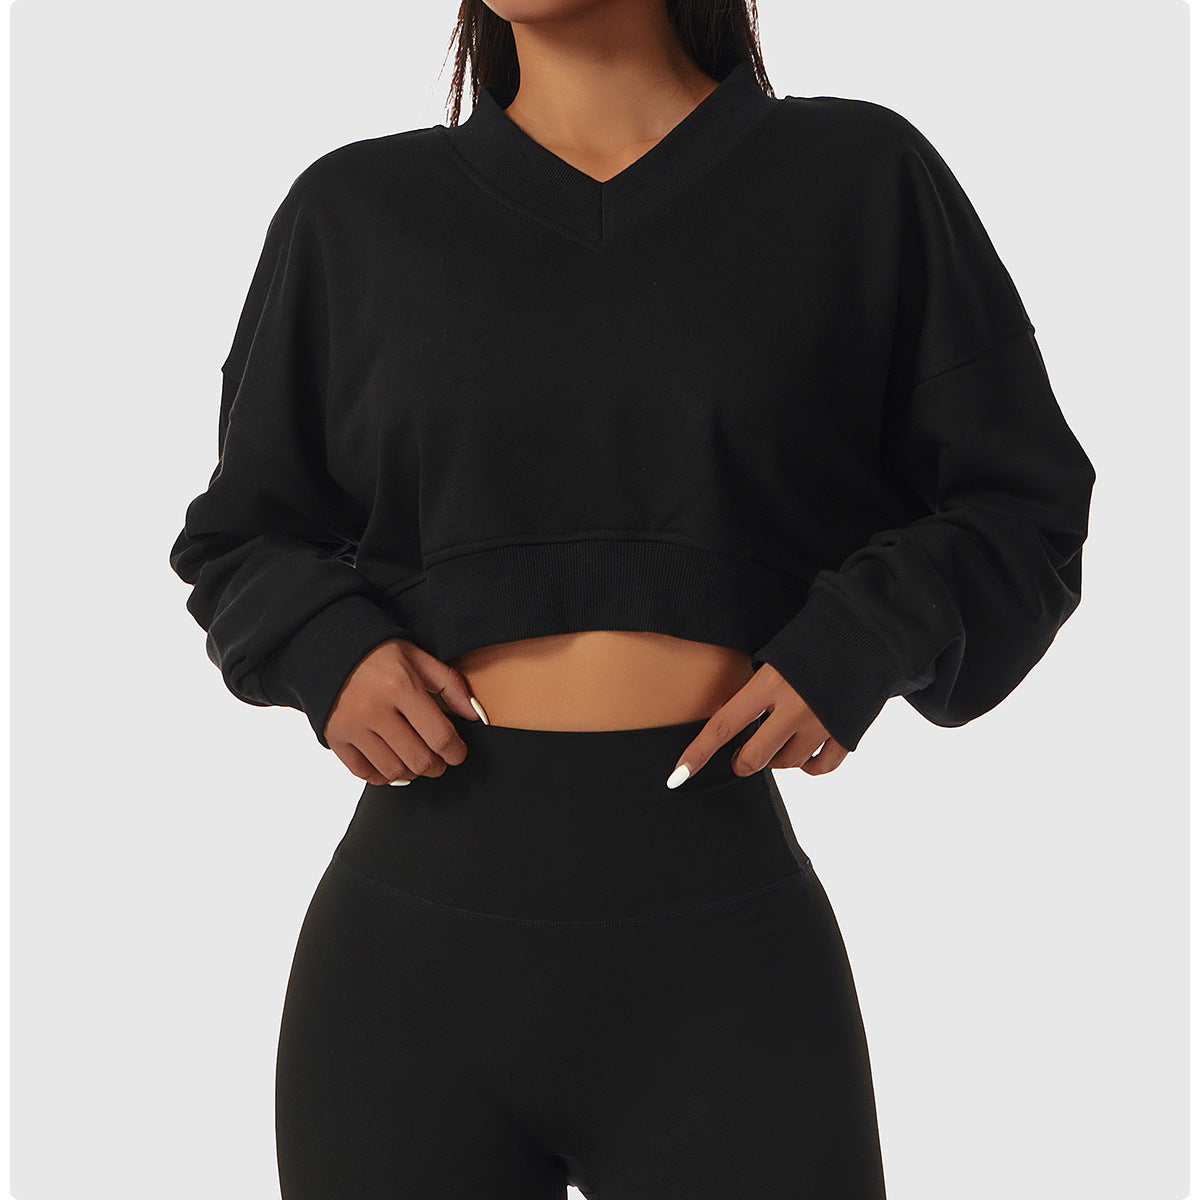 Short, thick sweatshirt - Super Active™